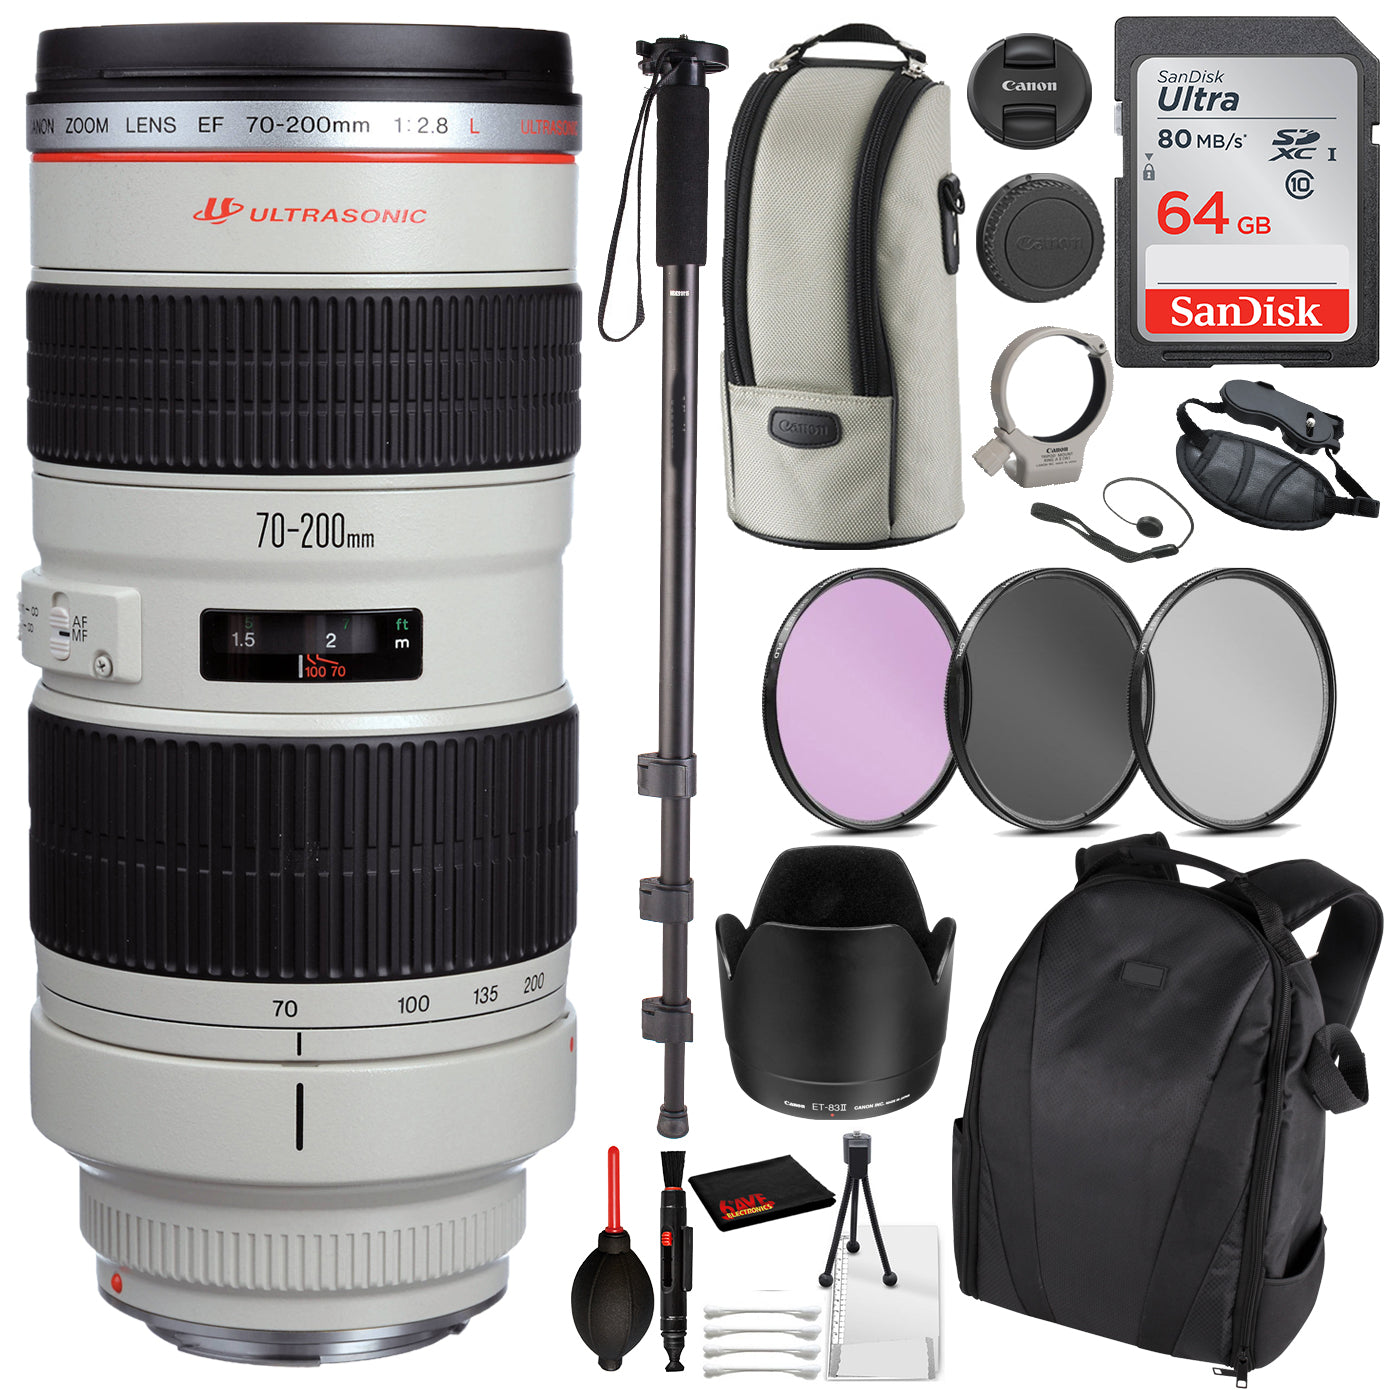 Canon EF 70-200mm f/2.8L USM Lens Essential Bundle Kit for Canon EOS - International Model No Warranty